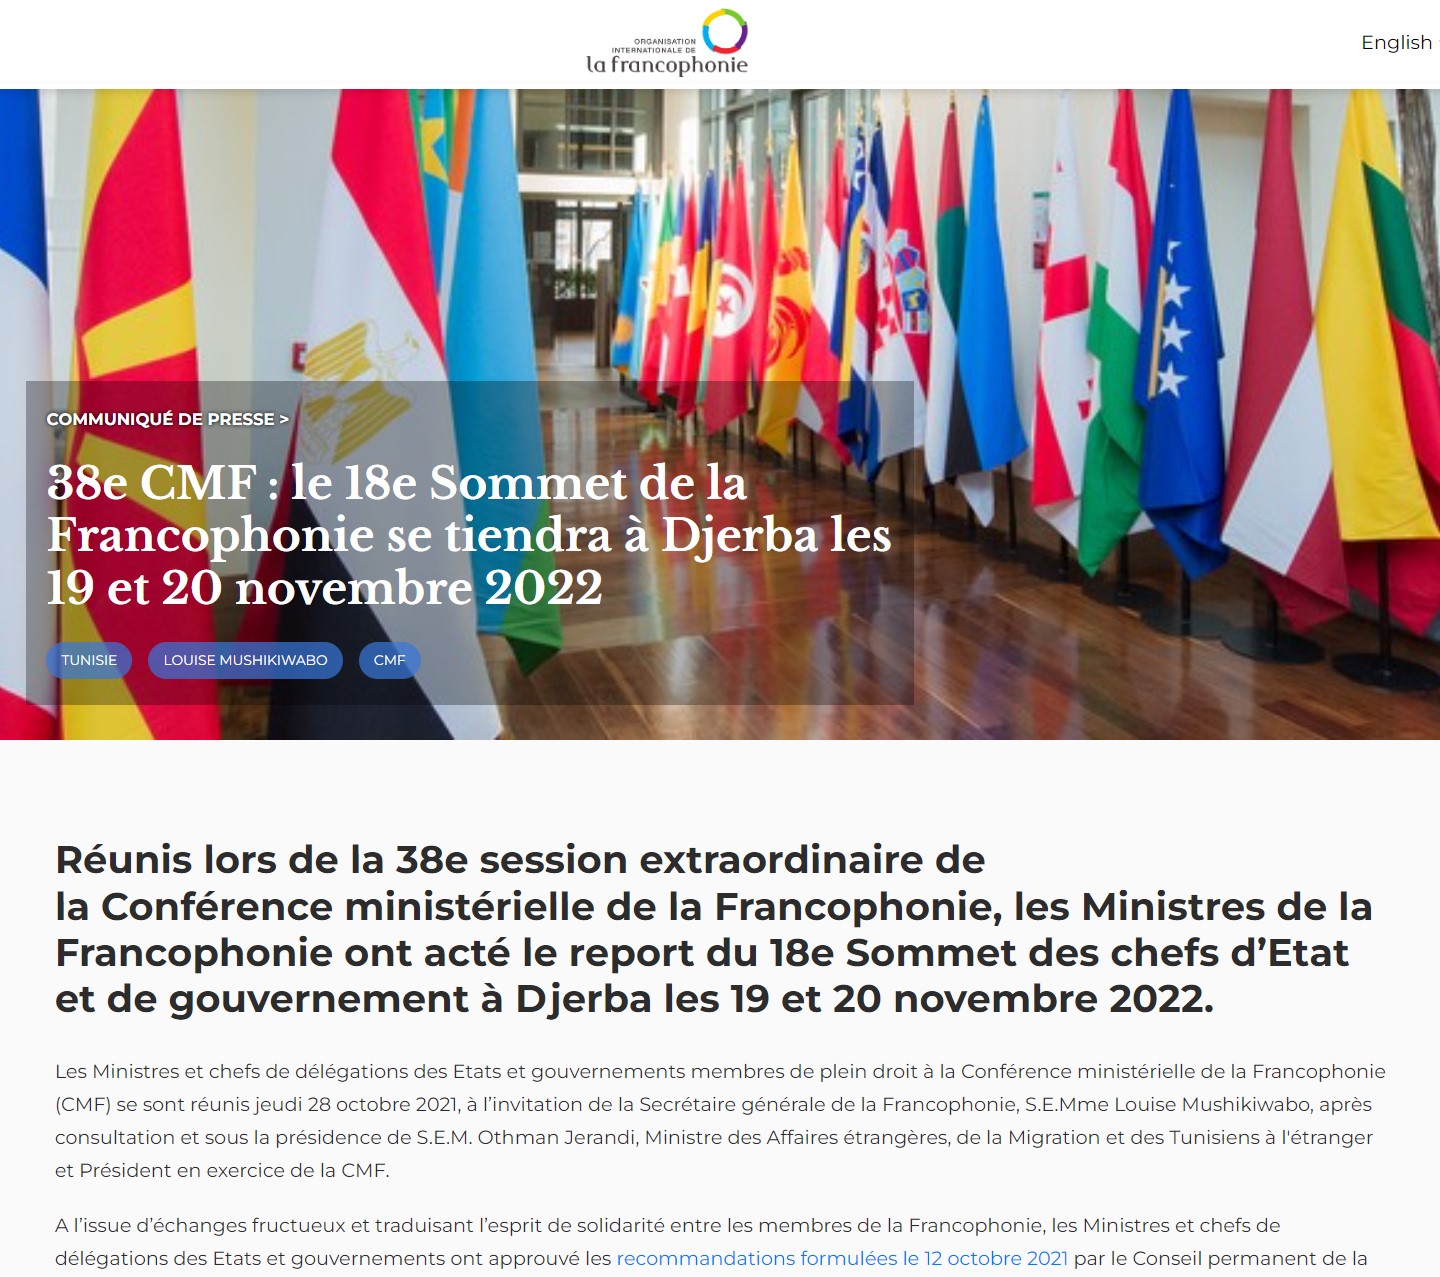 18e-sommet-de-la-francophonie-a-djerba-en-tunisie-19-et-20-novembre-2022.jpg